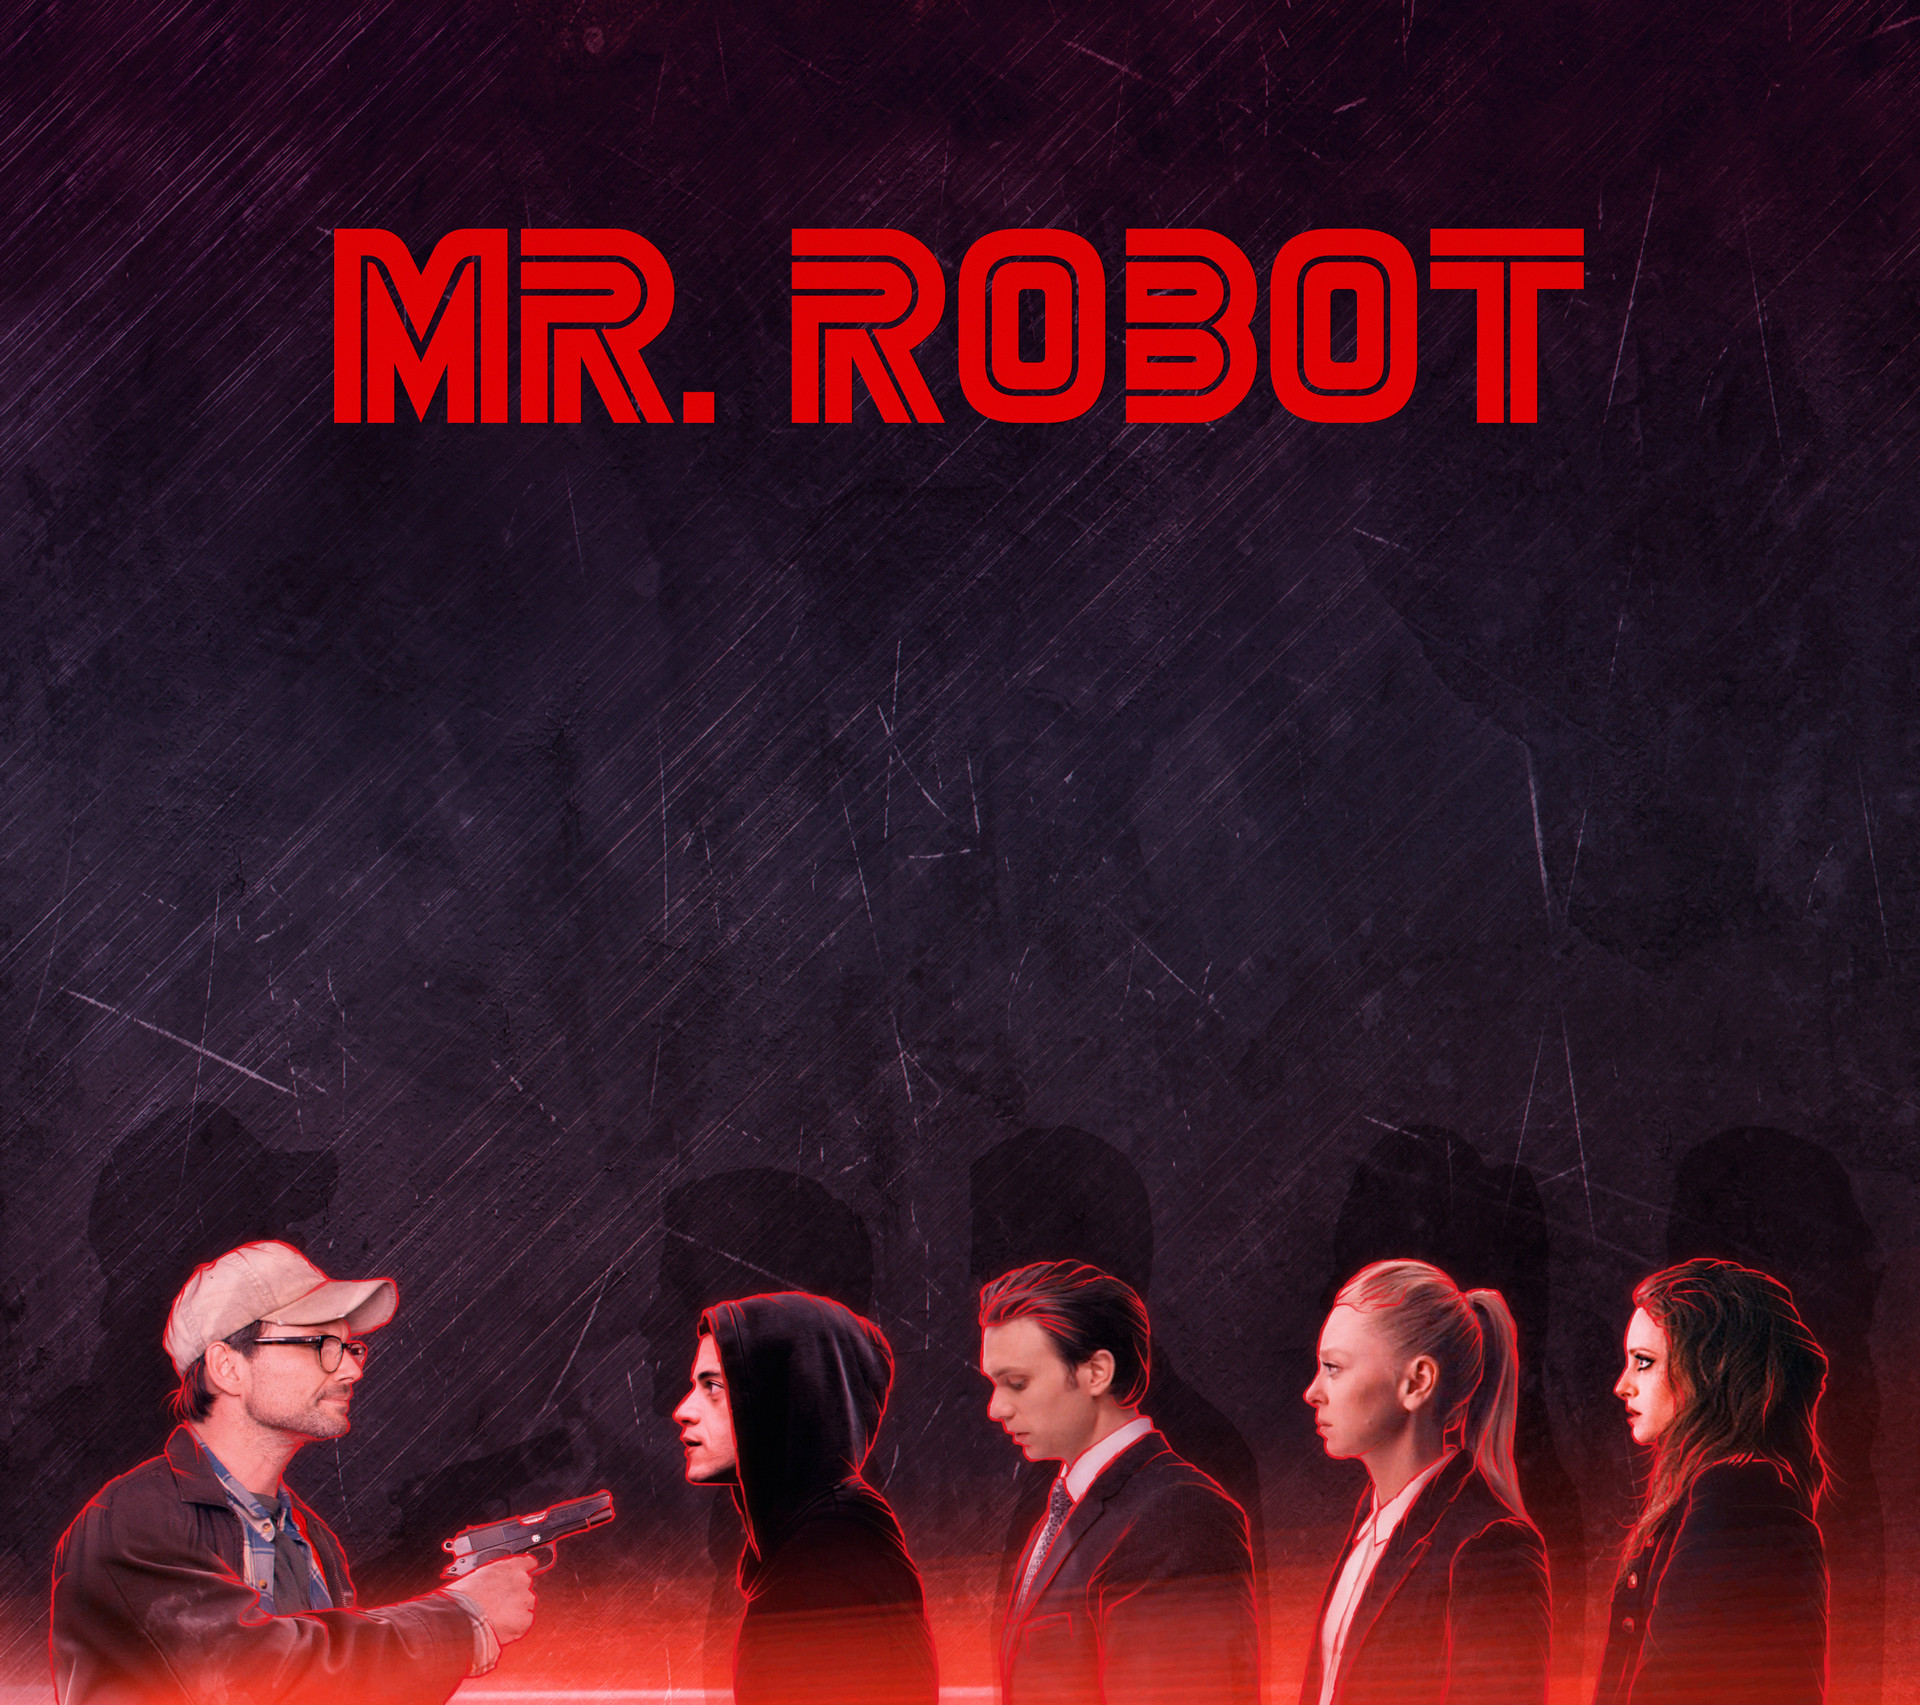 Mr. Robot Wallpaper 4K by ValencyGraphics on DeviantArt